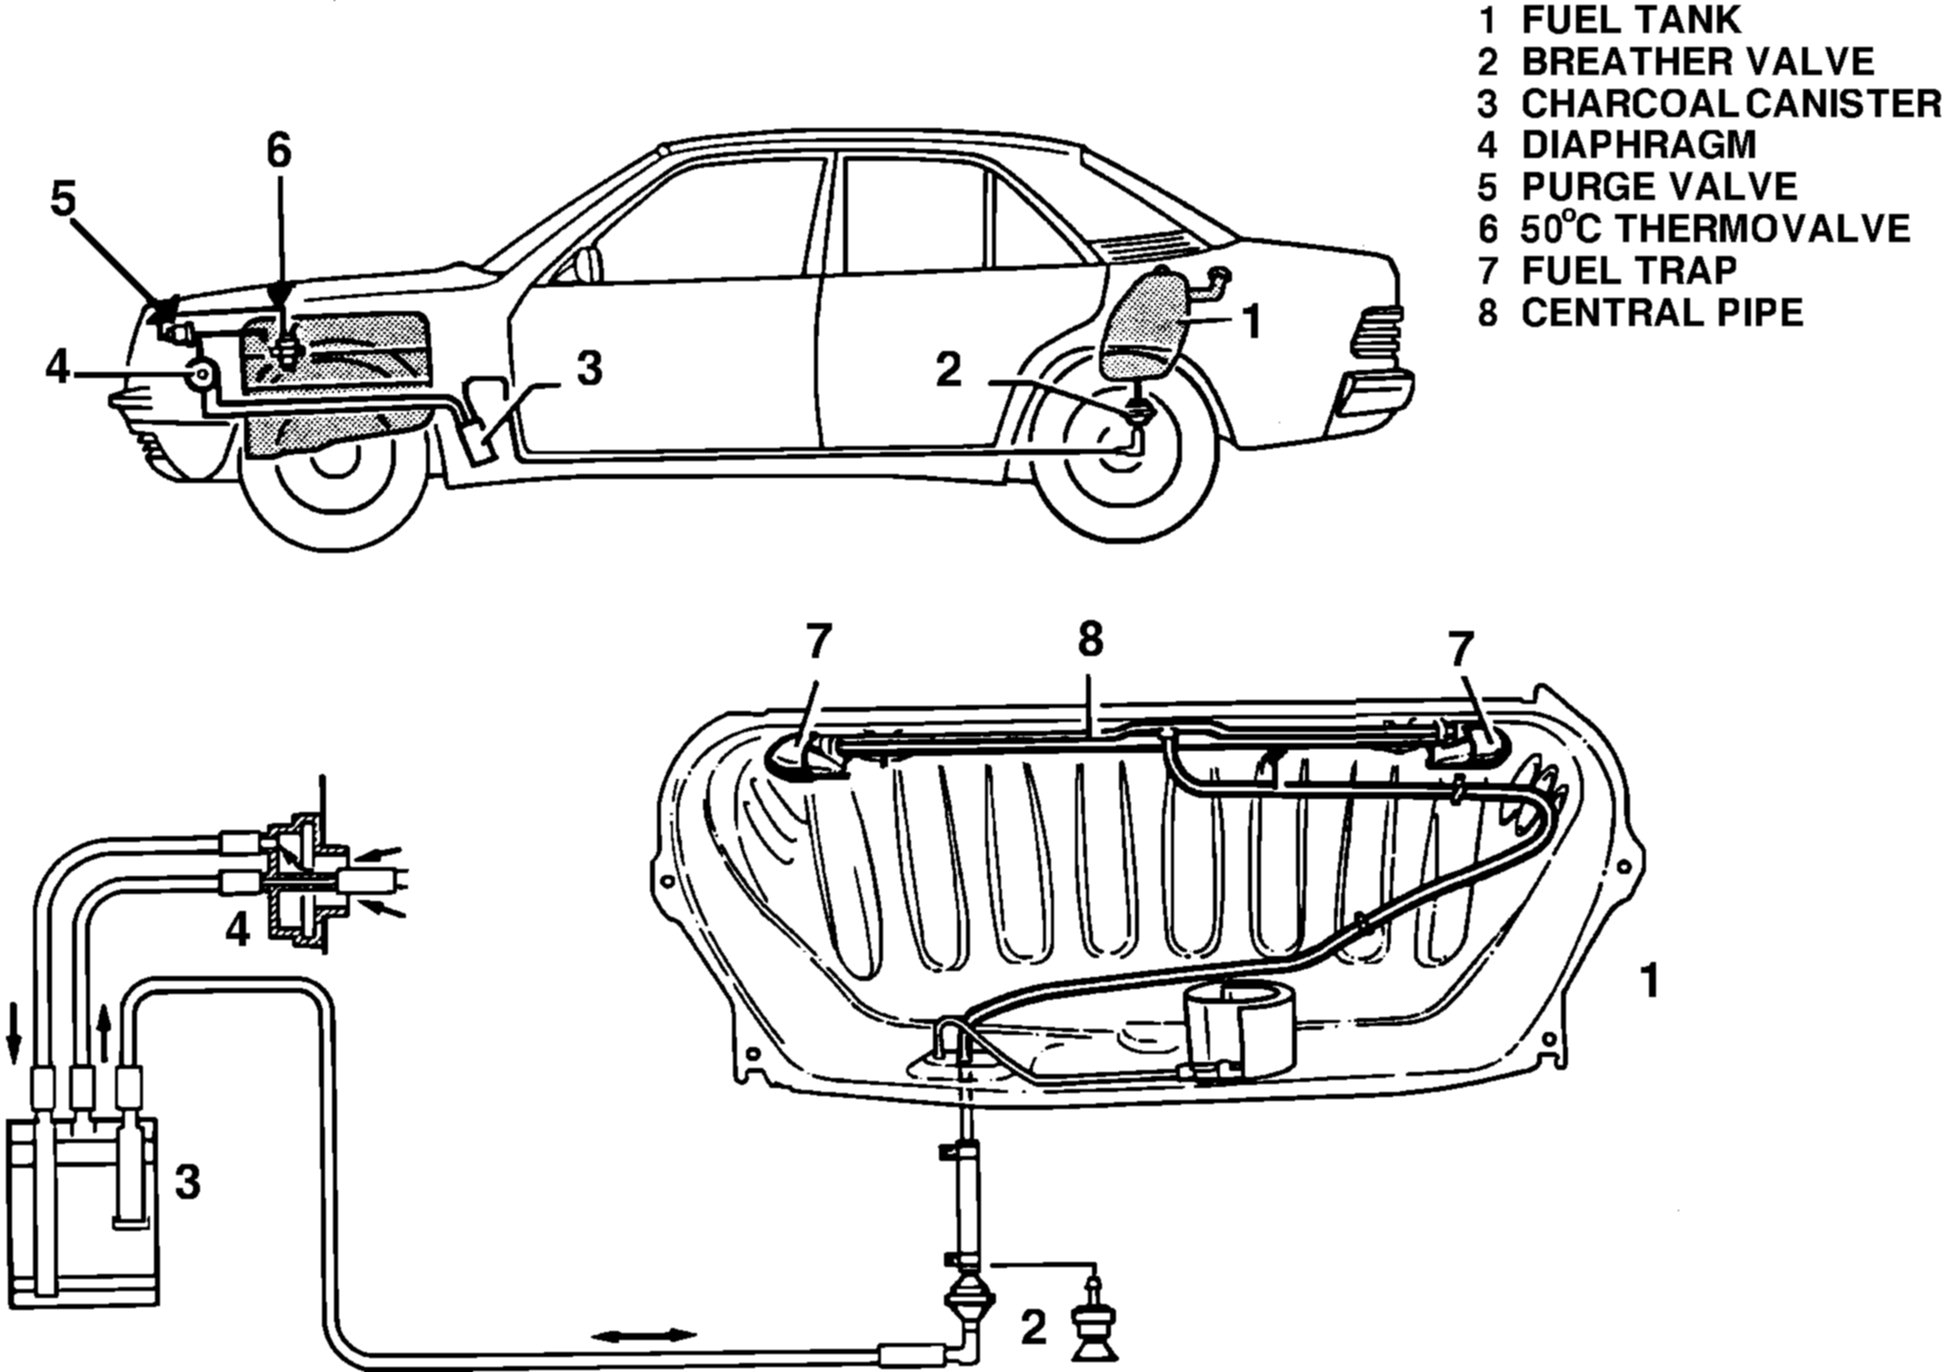 1956-190e-fuel-tank-system-jpg